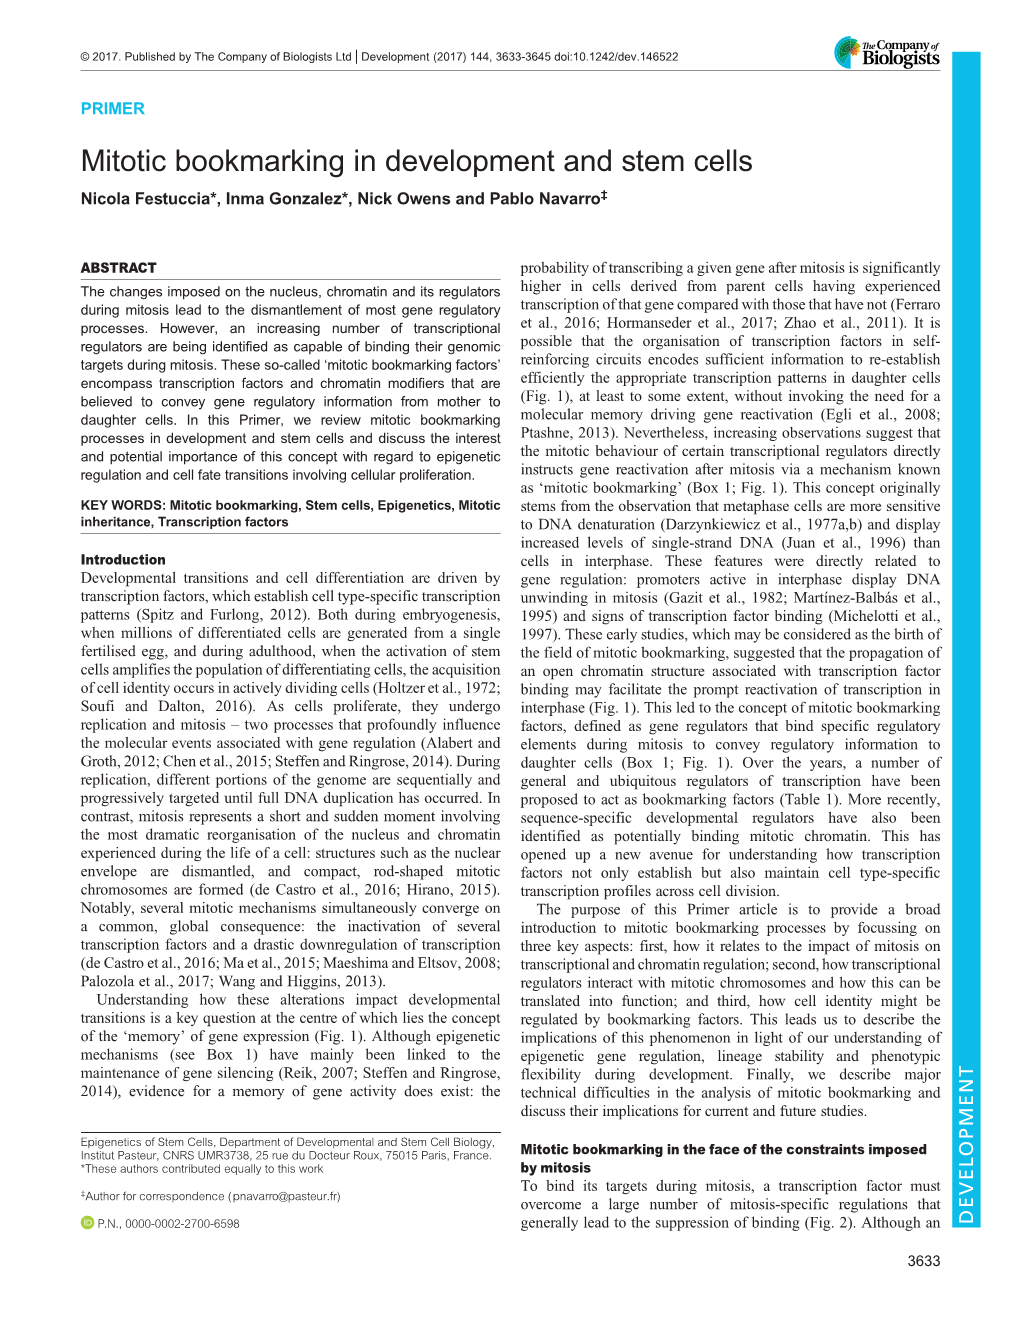 Mitotic Bookmarking in Development and Stem Cells Nicola Festuccia*, Inma Gonzalez*, Nick Owens and Pablo Navarro‡